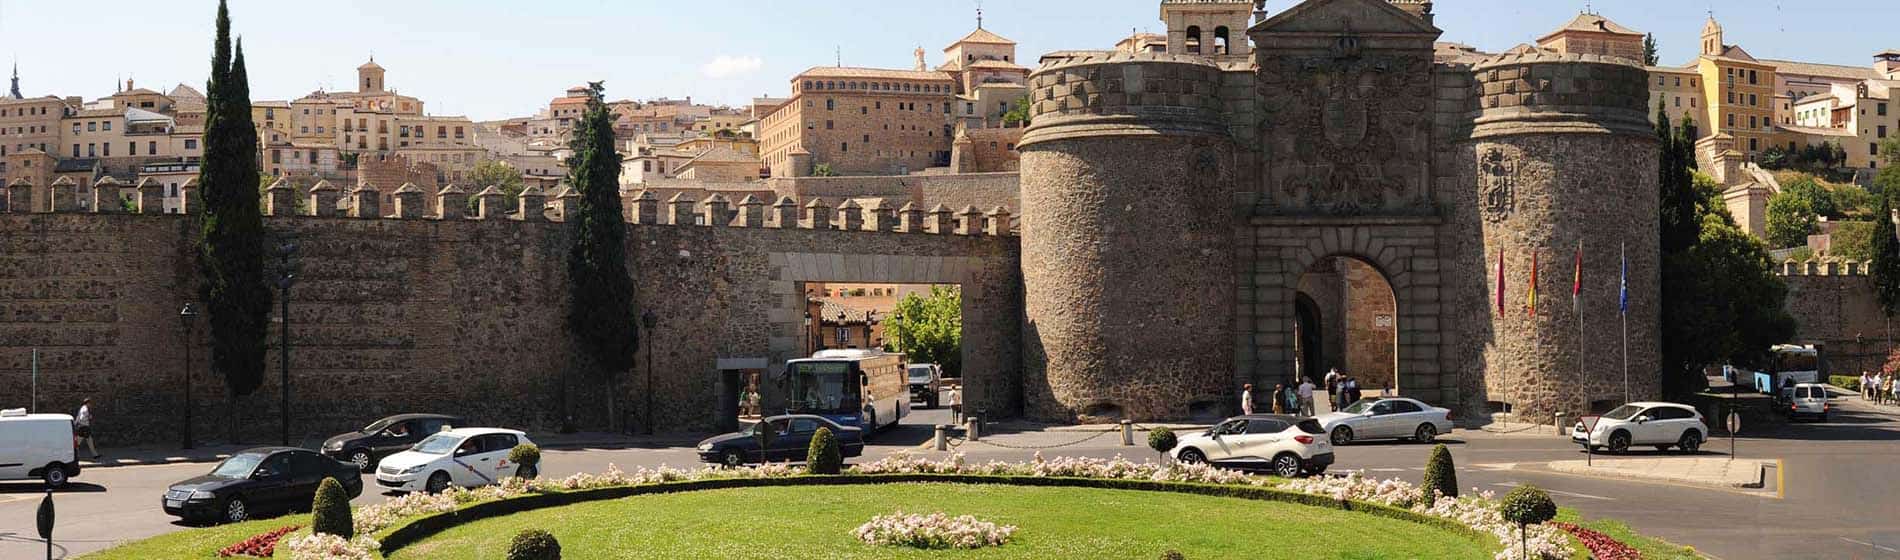 Toledo, vista de la Puerta de la Bisagra